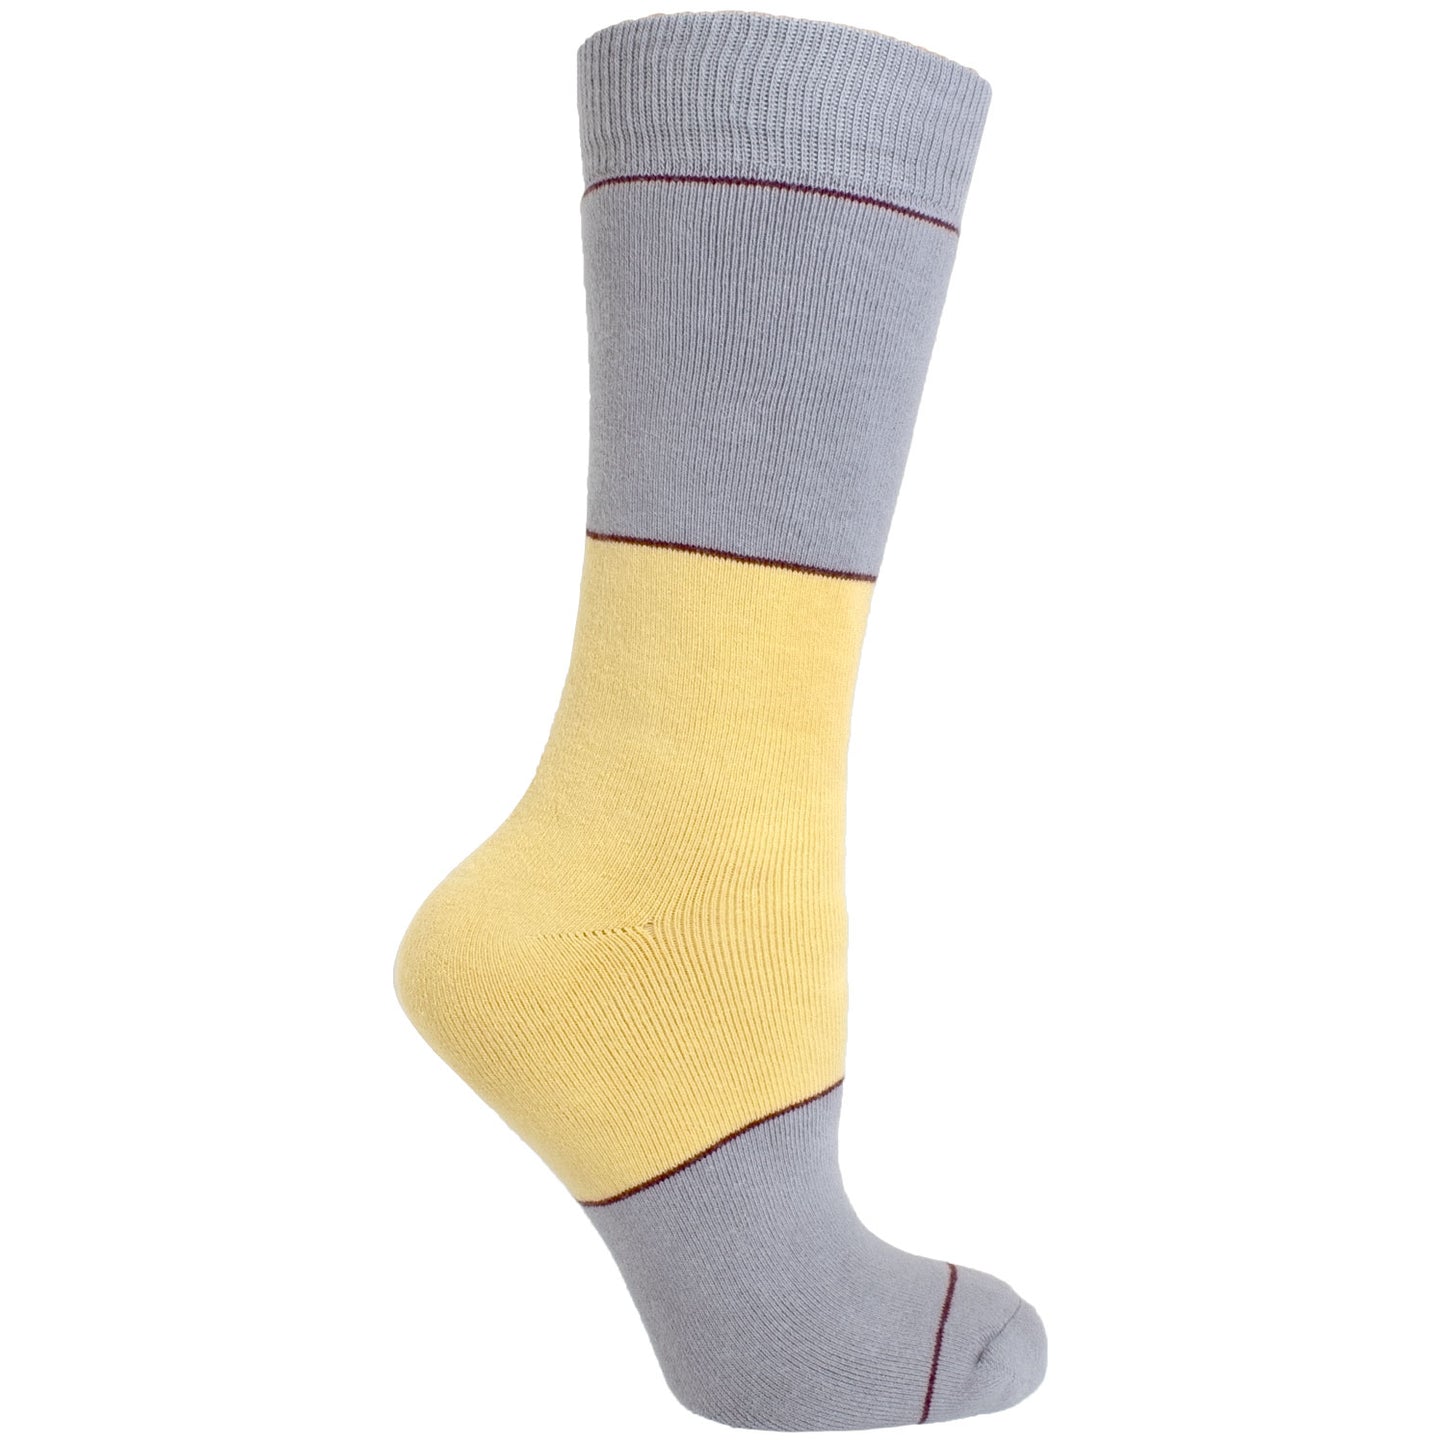 Men's Socks Color Block Striped Athletic Performance Comfortable Mid Calf Crew Socks Yellow